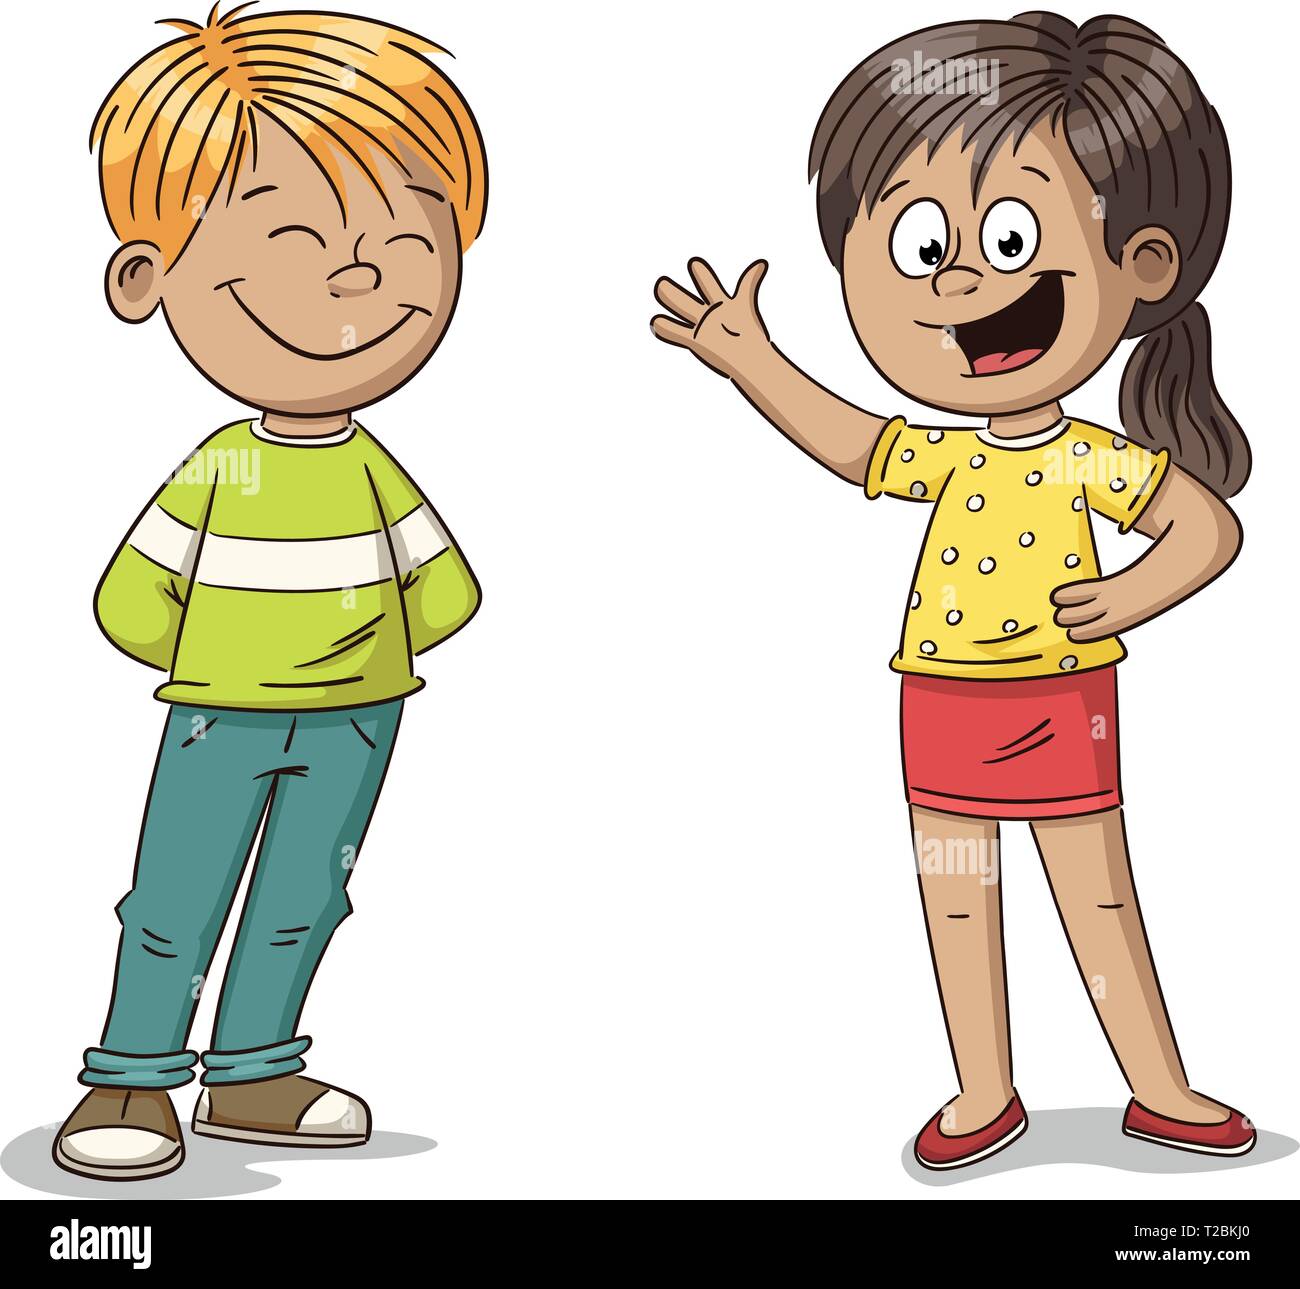 Happy cartoon boy and girl, hand draw vector illustration. Stock Vector